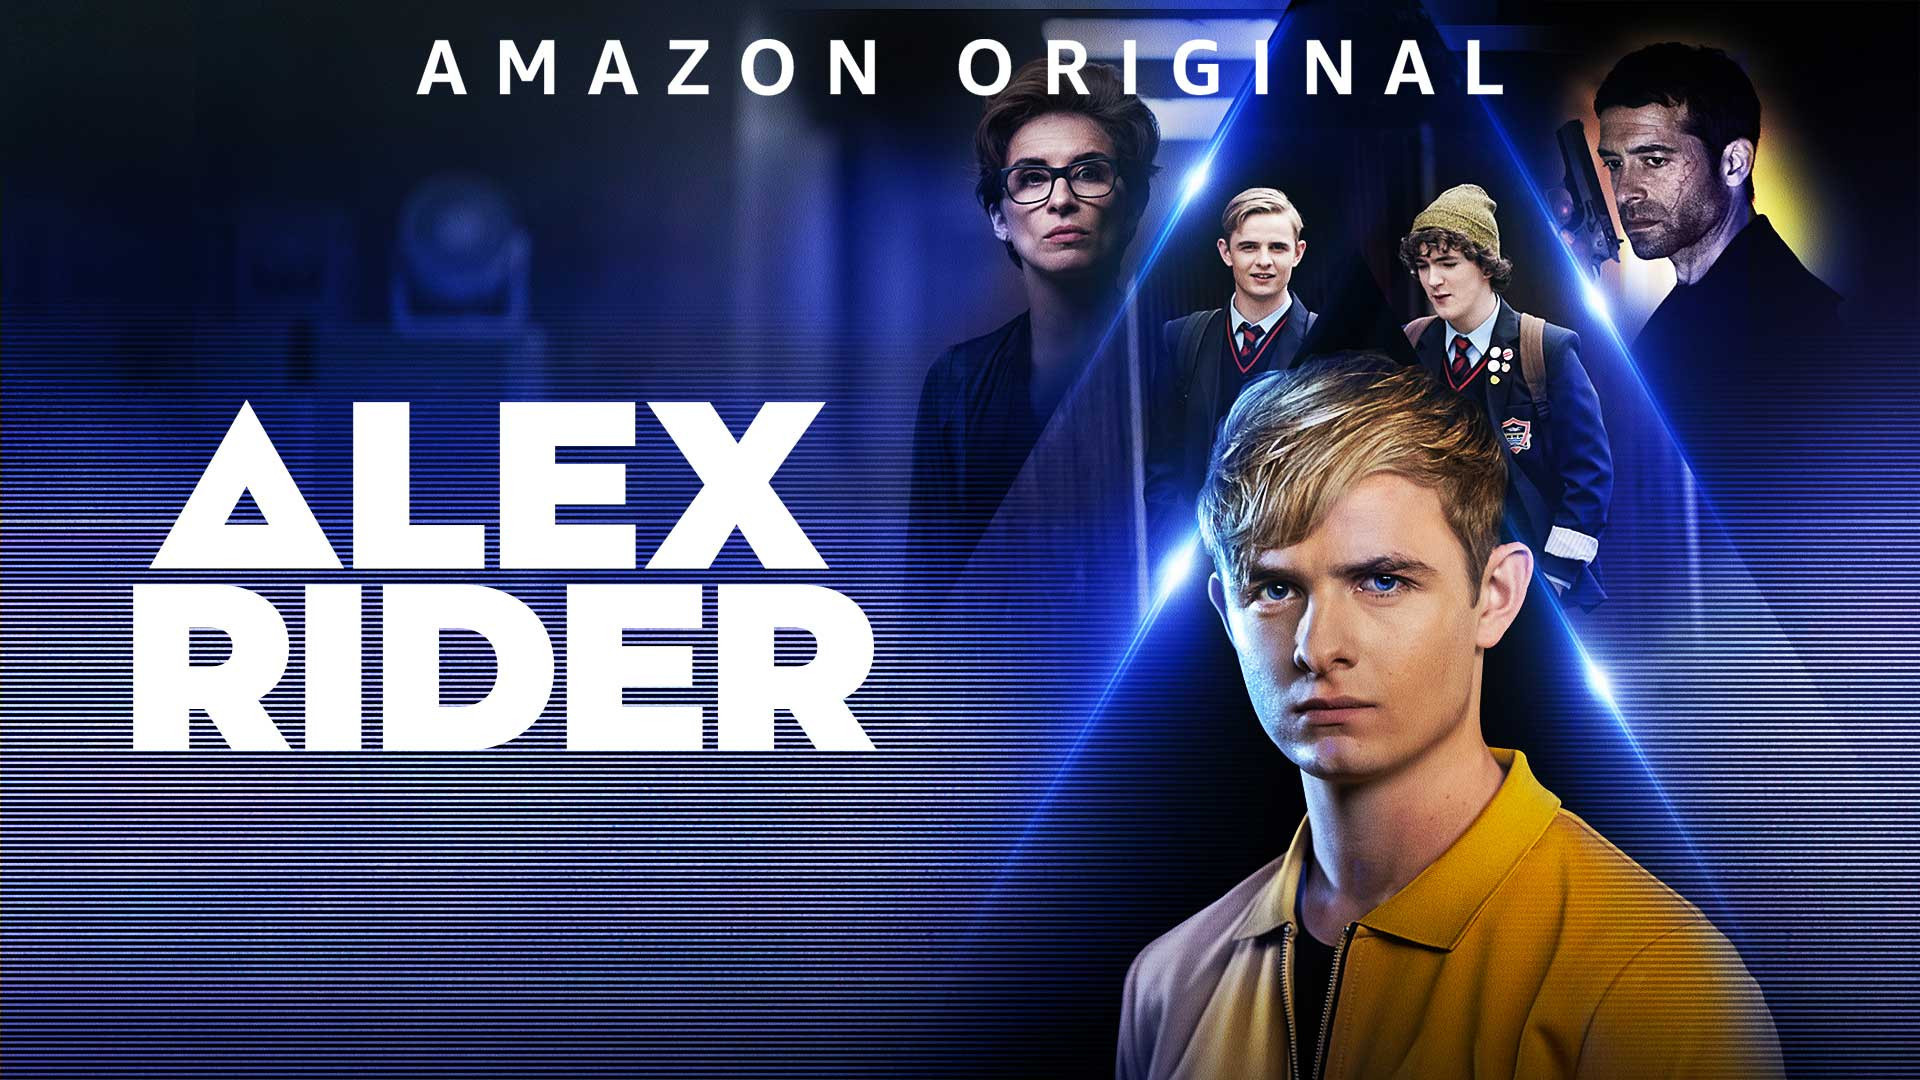 Alex Rider, TV Series, Otto Farrant, Amazon originals, 1920x1080 Full HD Desktop